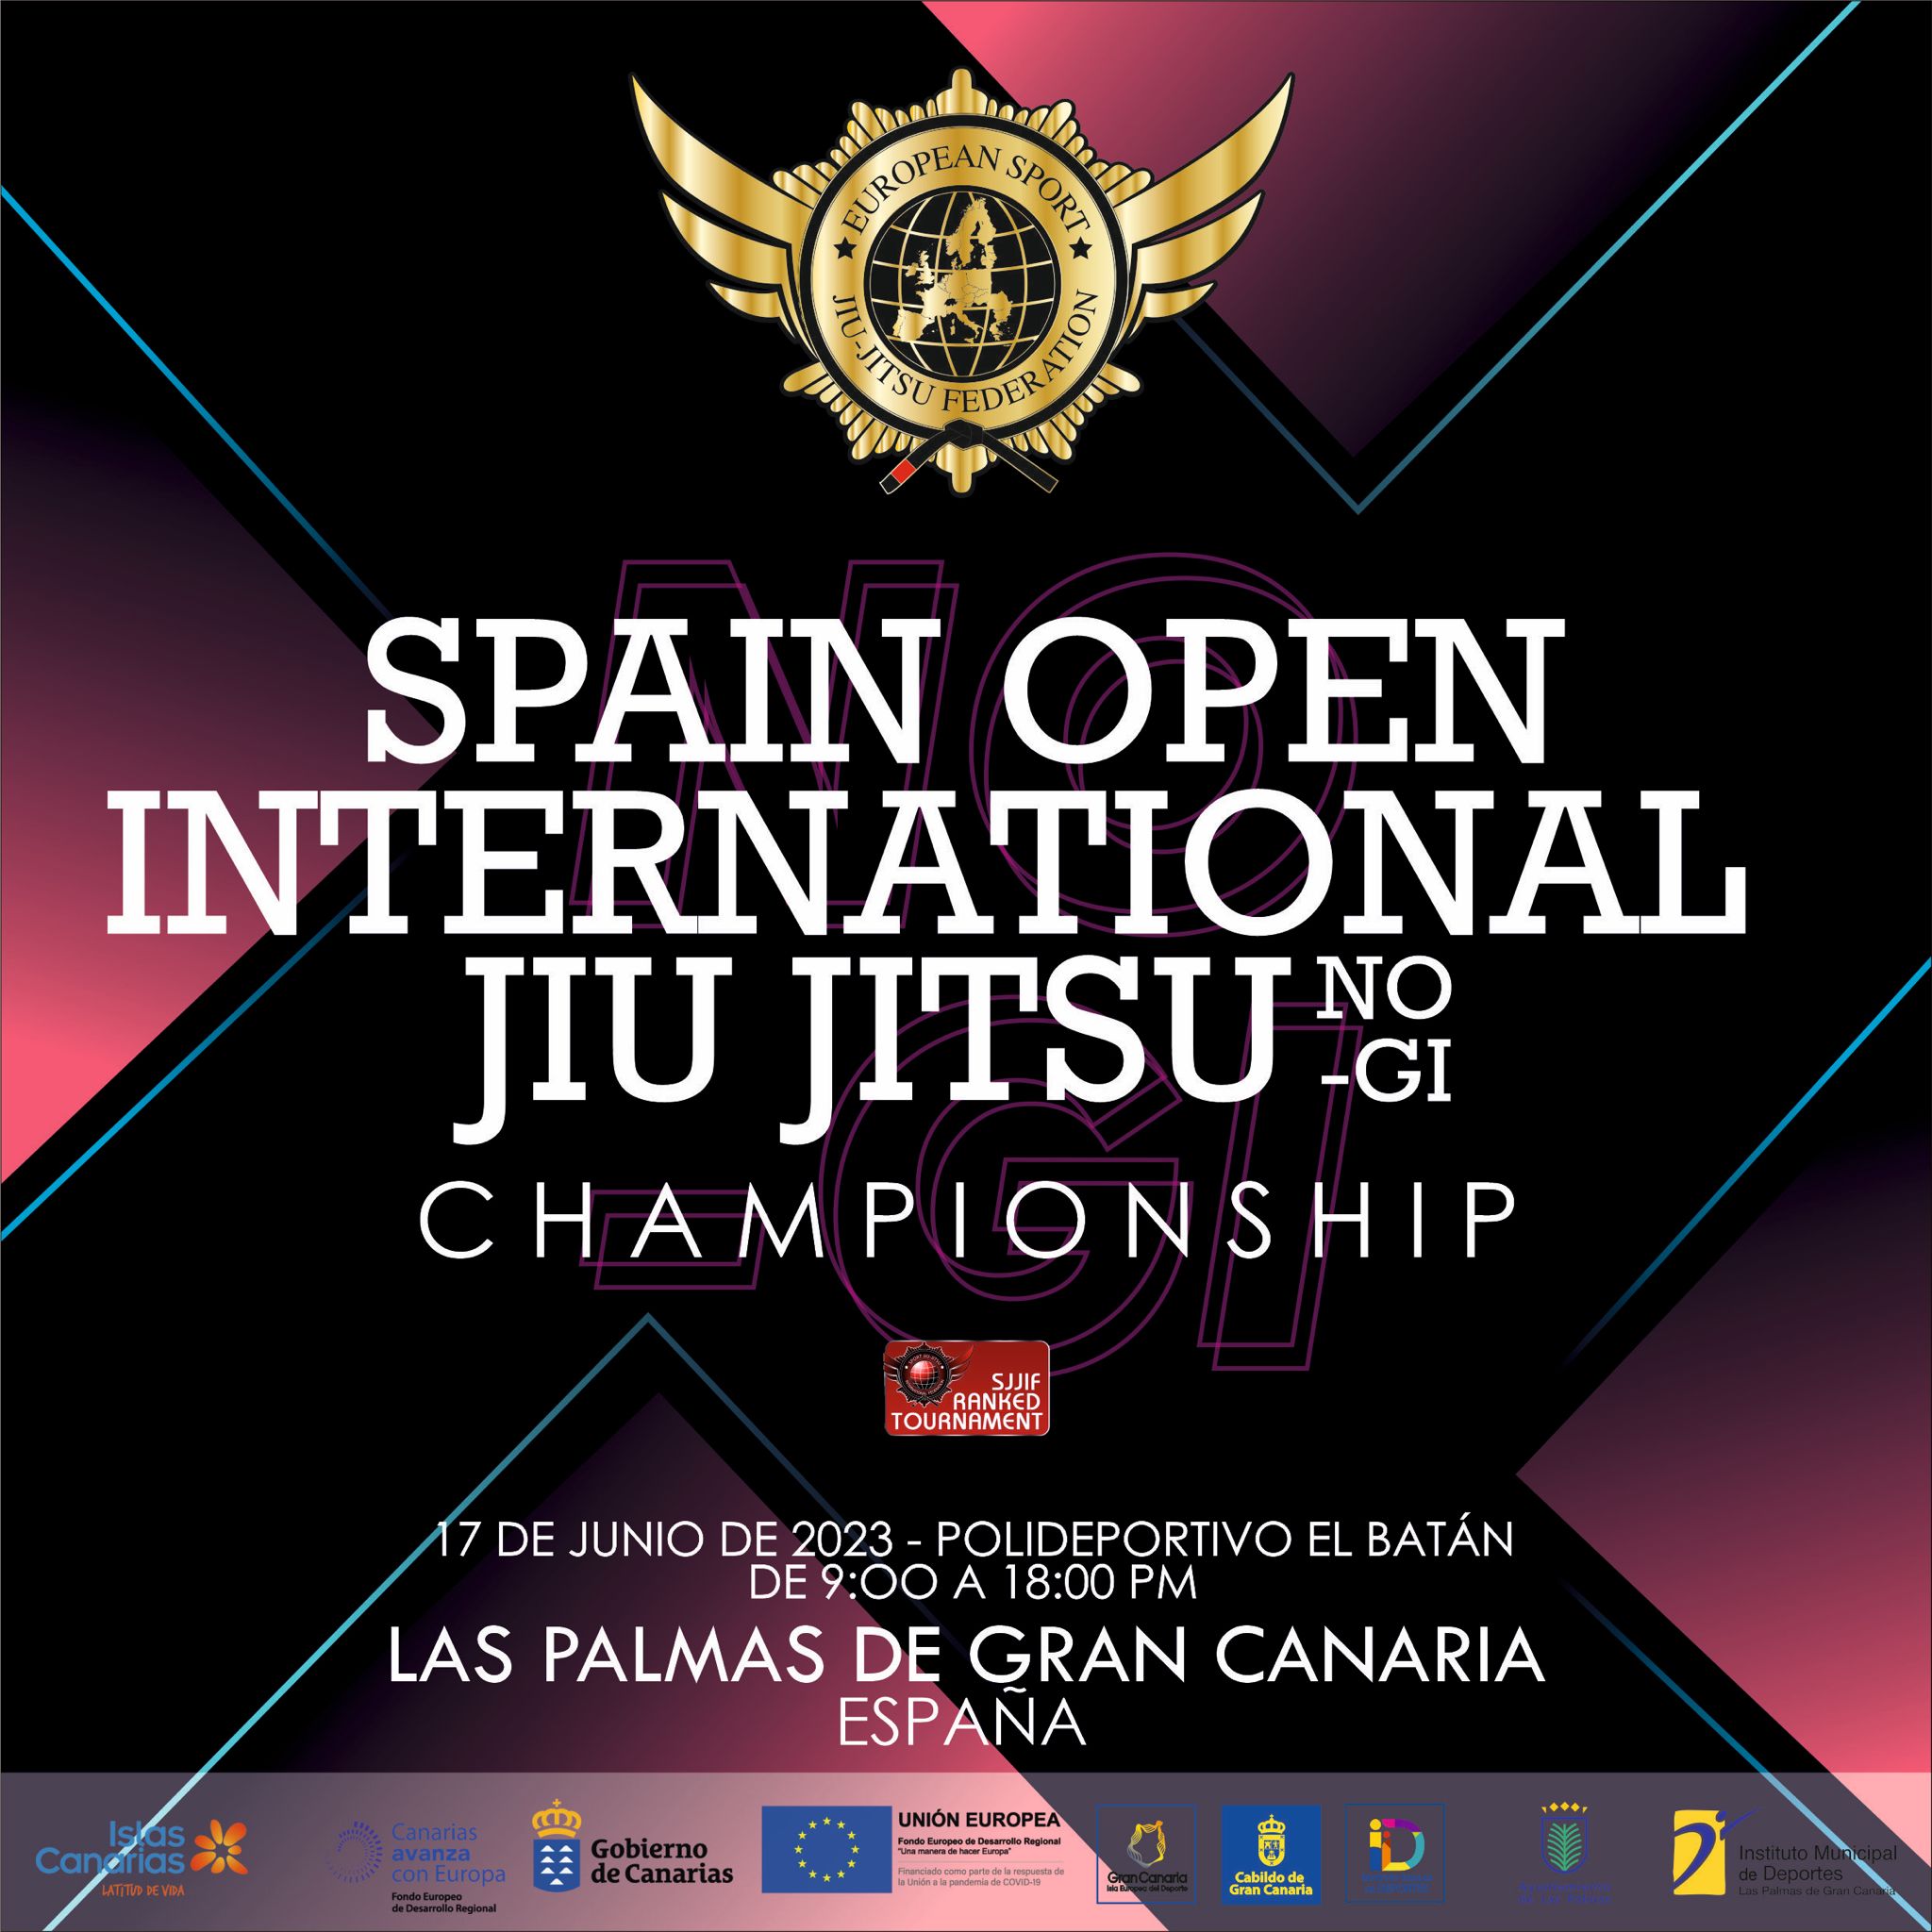 Spain Open International Jiu Jitsu Nogi